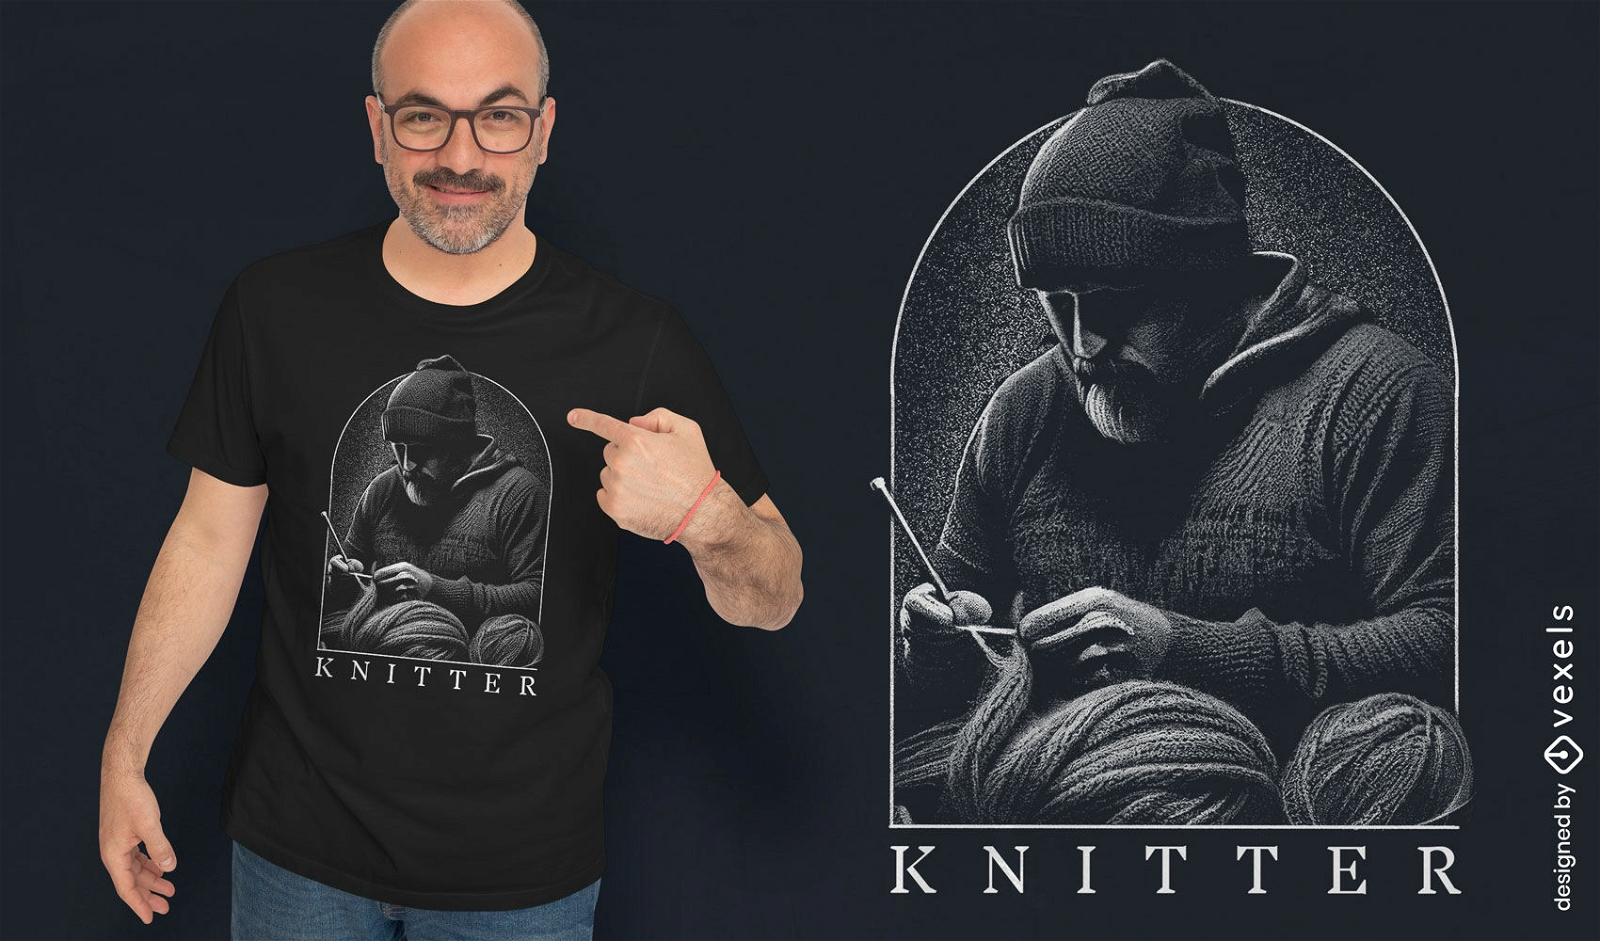 Knitting man t-shirt design